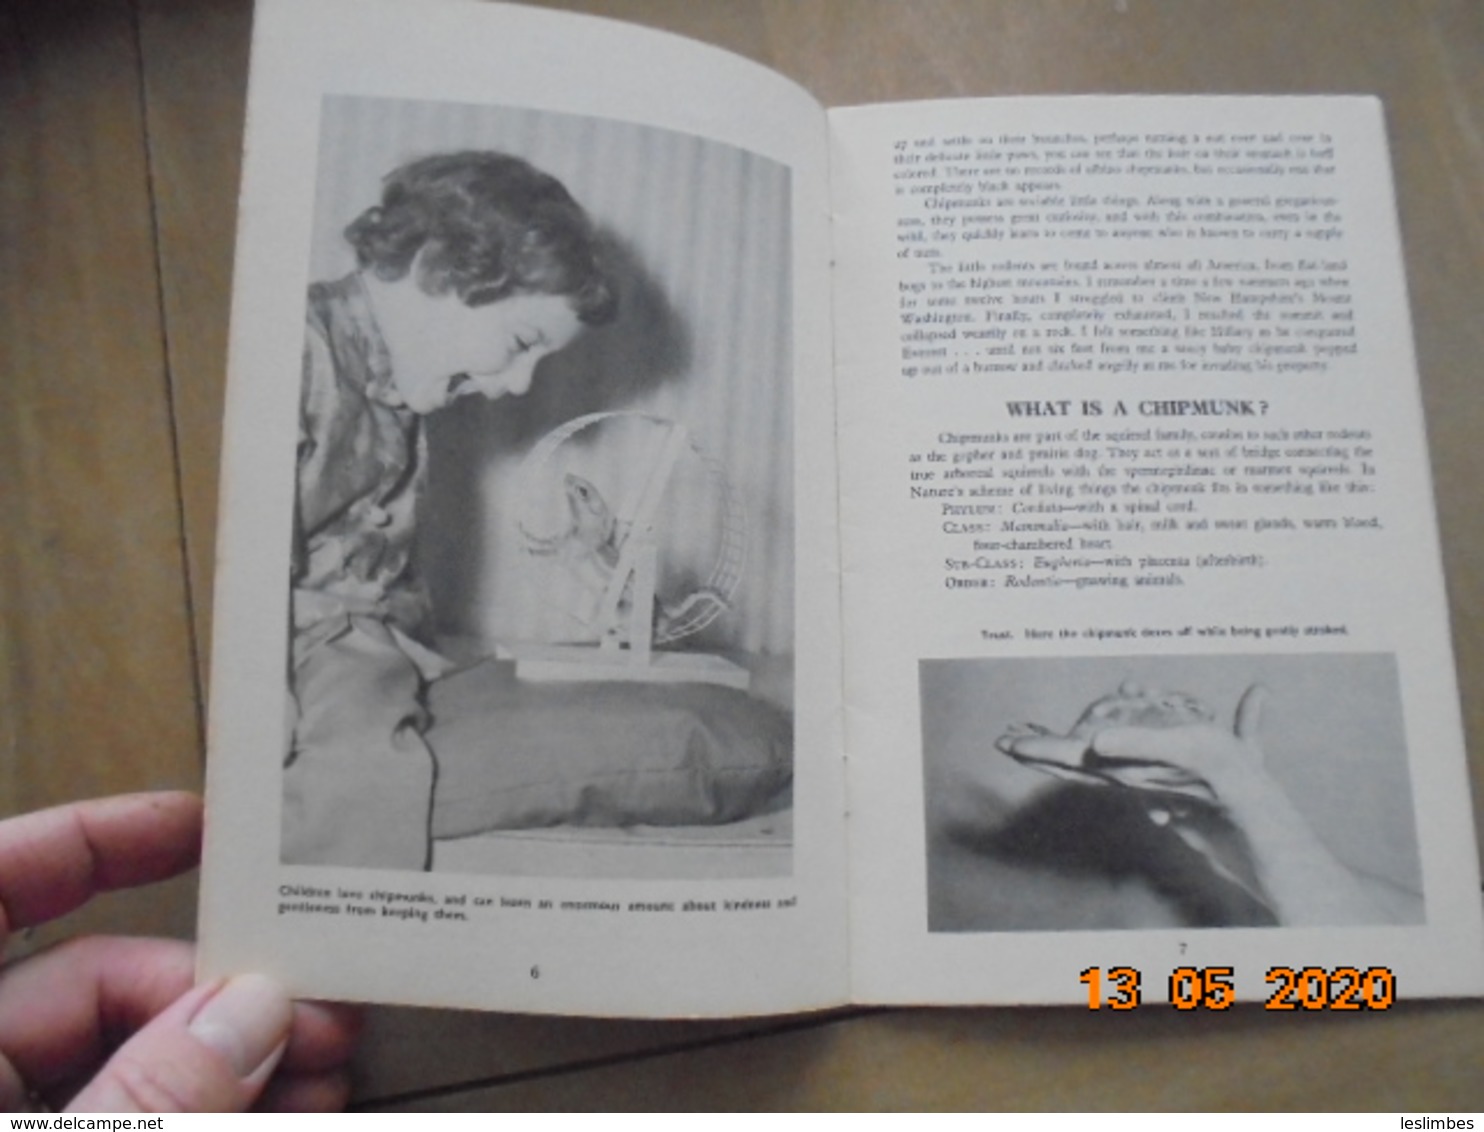 Chipmunks As Pets By Robert Gannon. T.F.H. Publications 1959. - Pet/ Animal Care